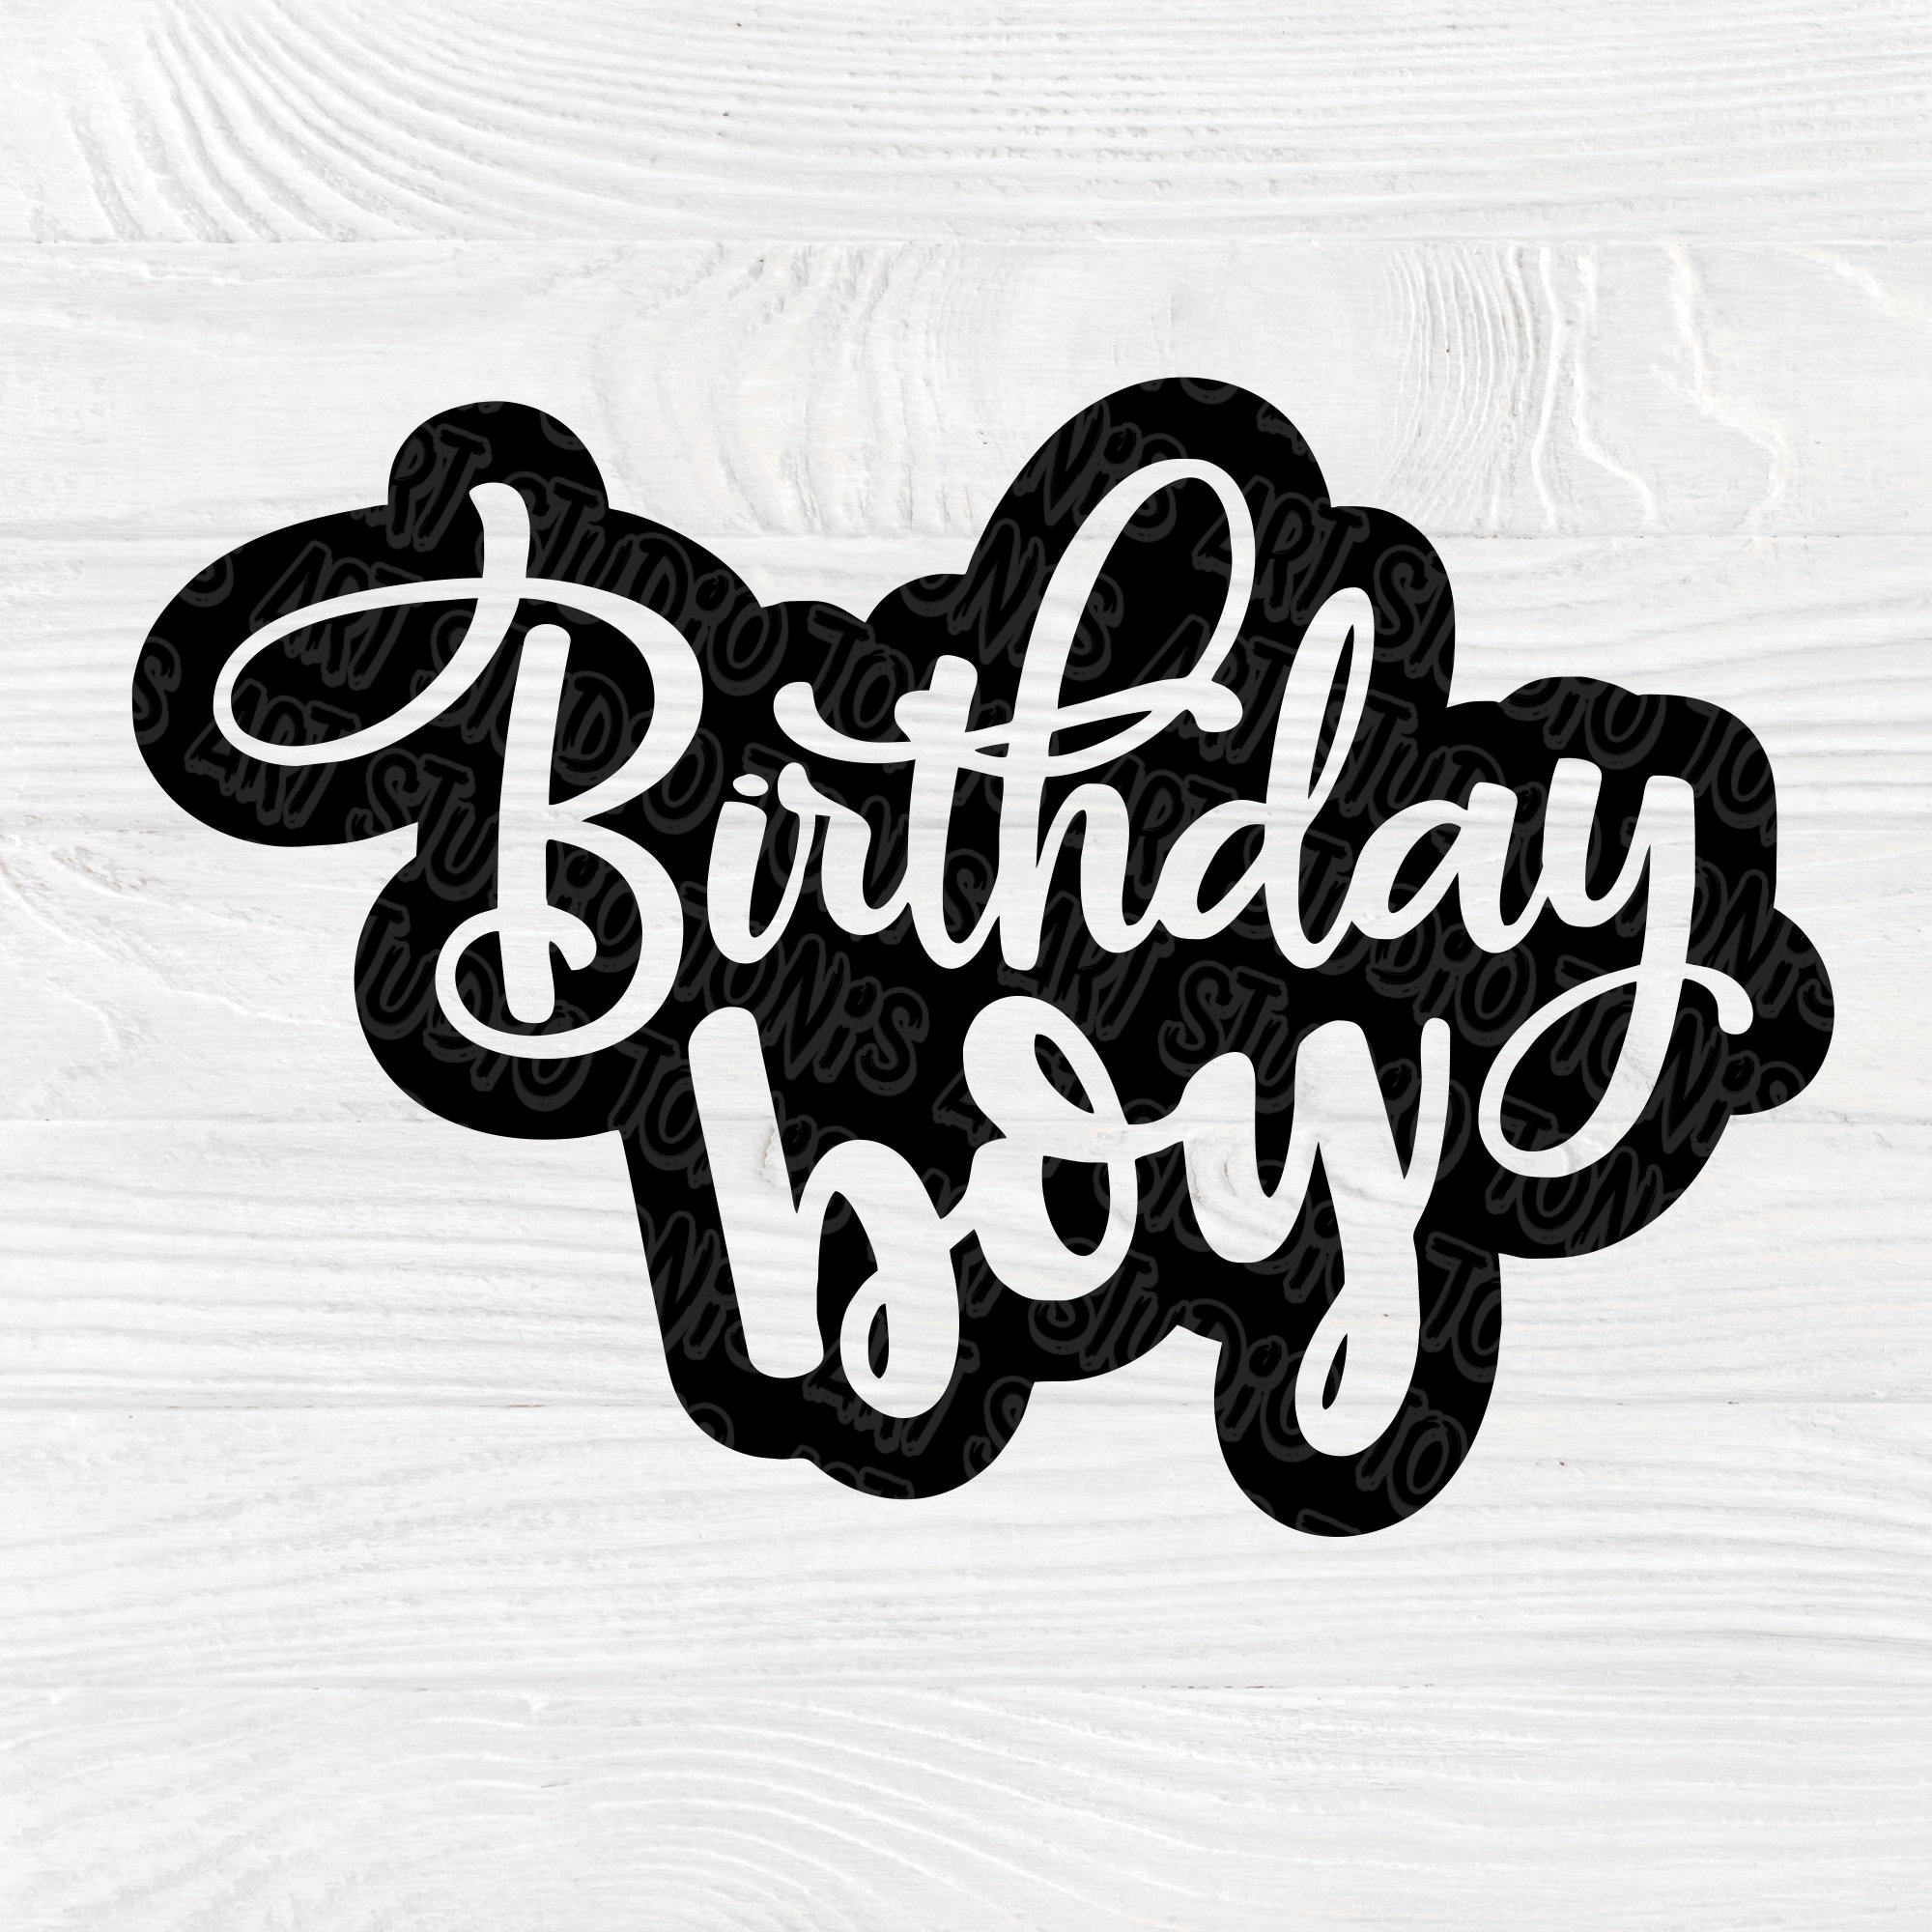 Download Birthday boy SVG | Birthday boy family svg | Mom and dad svg | Birthday boy shirt | Birthday svg ...